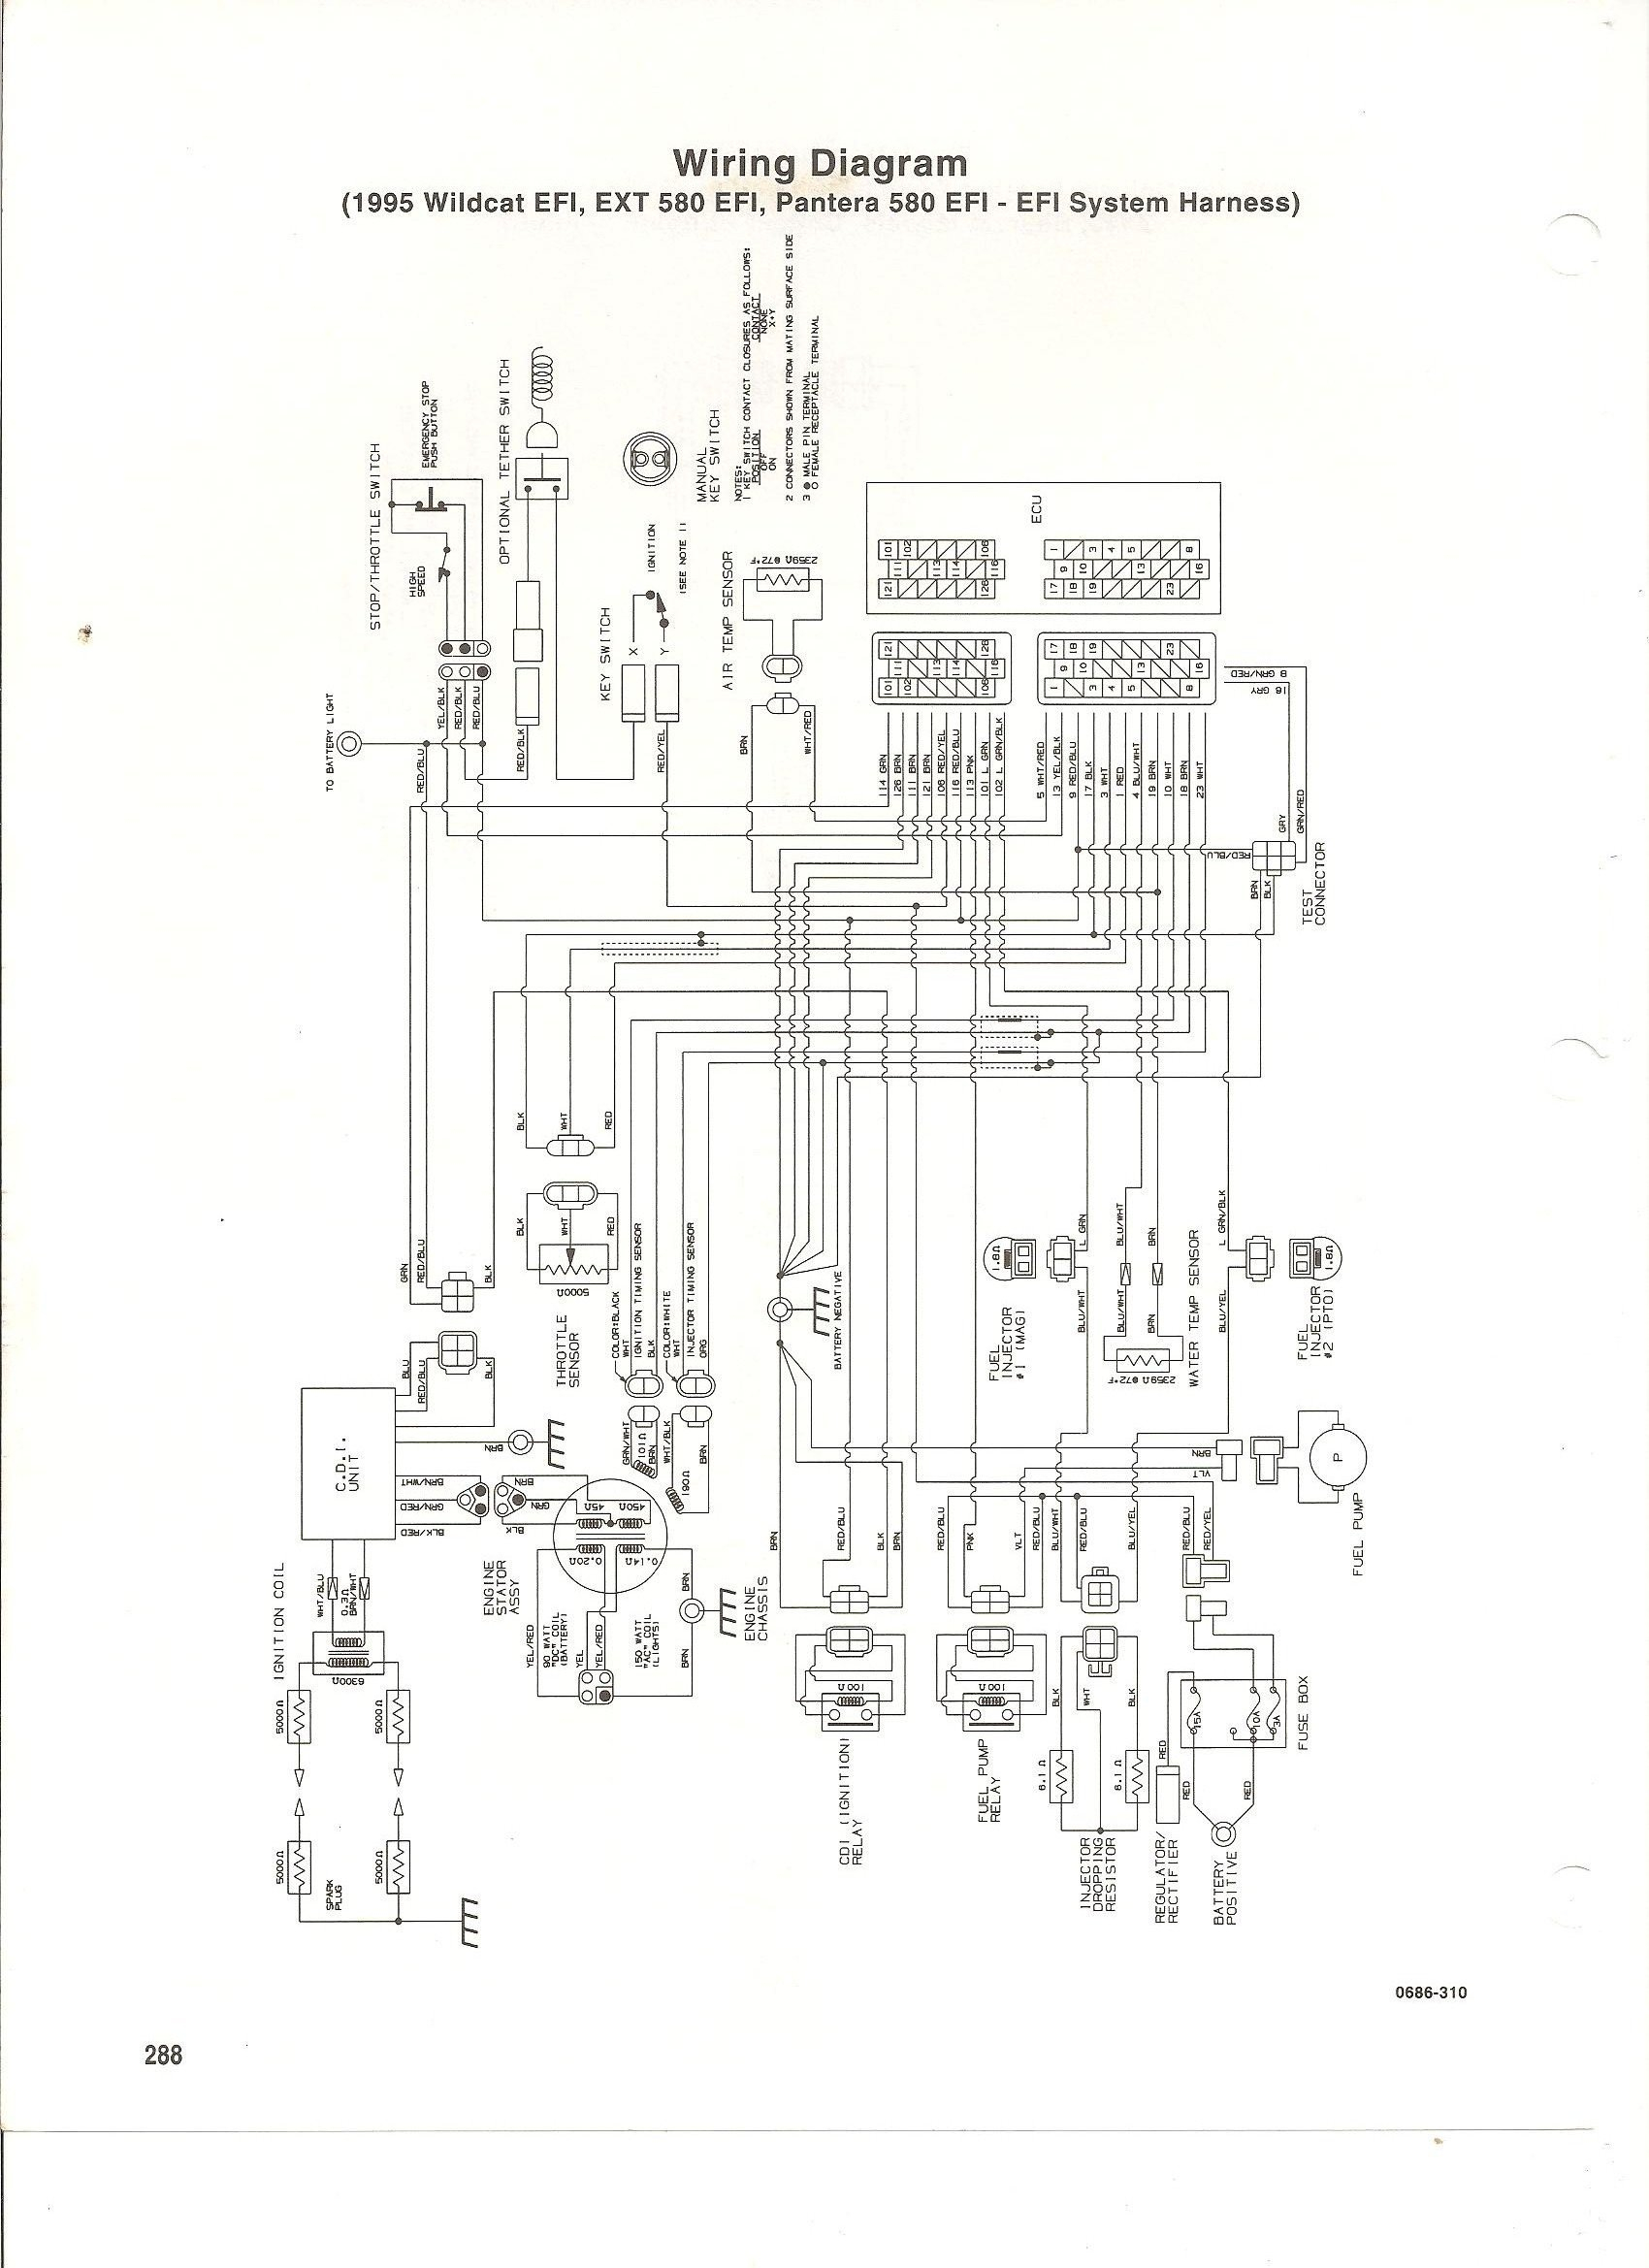 Wiring Diagram For 1998 Arctic Cat 580 Ext